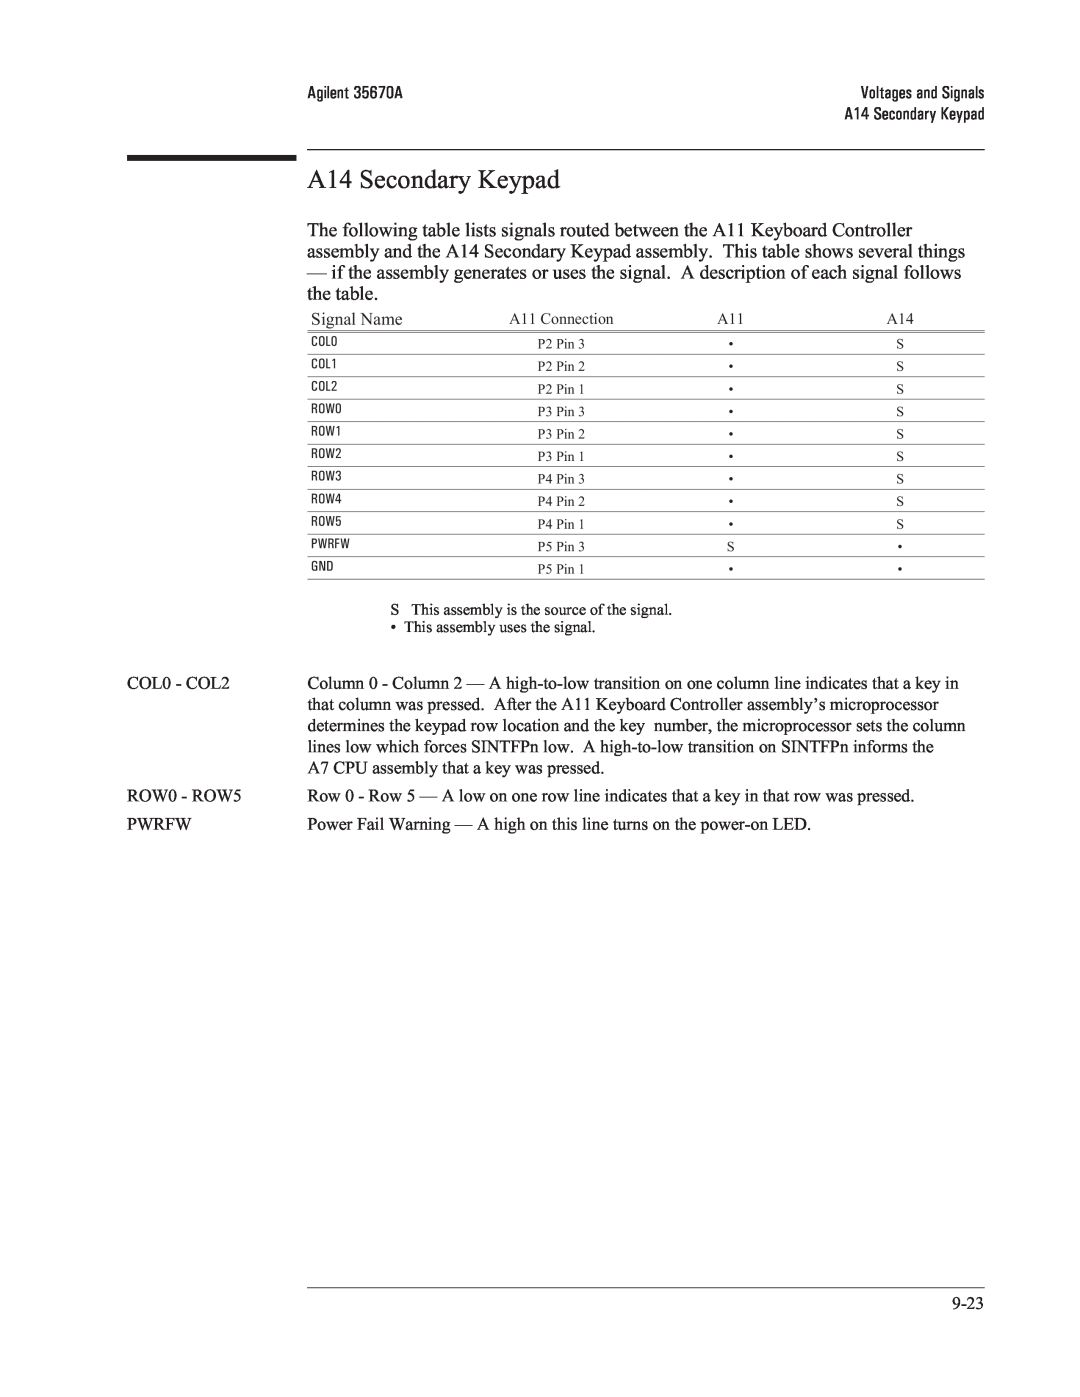 Agilent Technologies 35670-90066 manual A14 Secondary Keypad, COL0 - COL2 